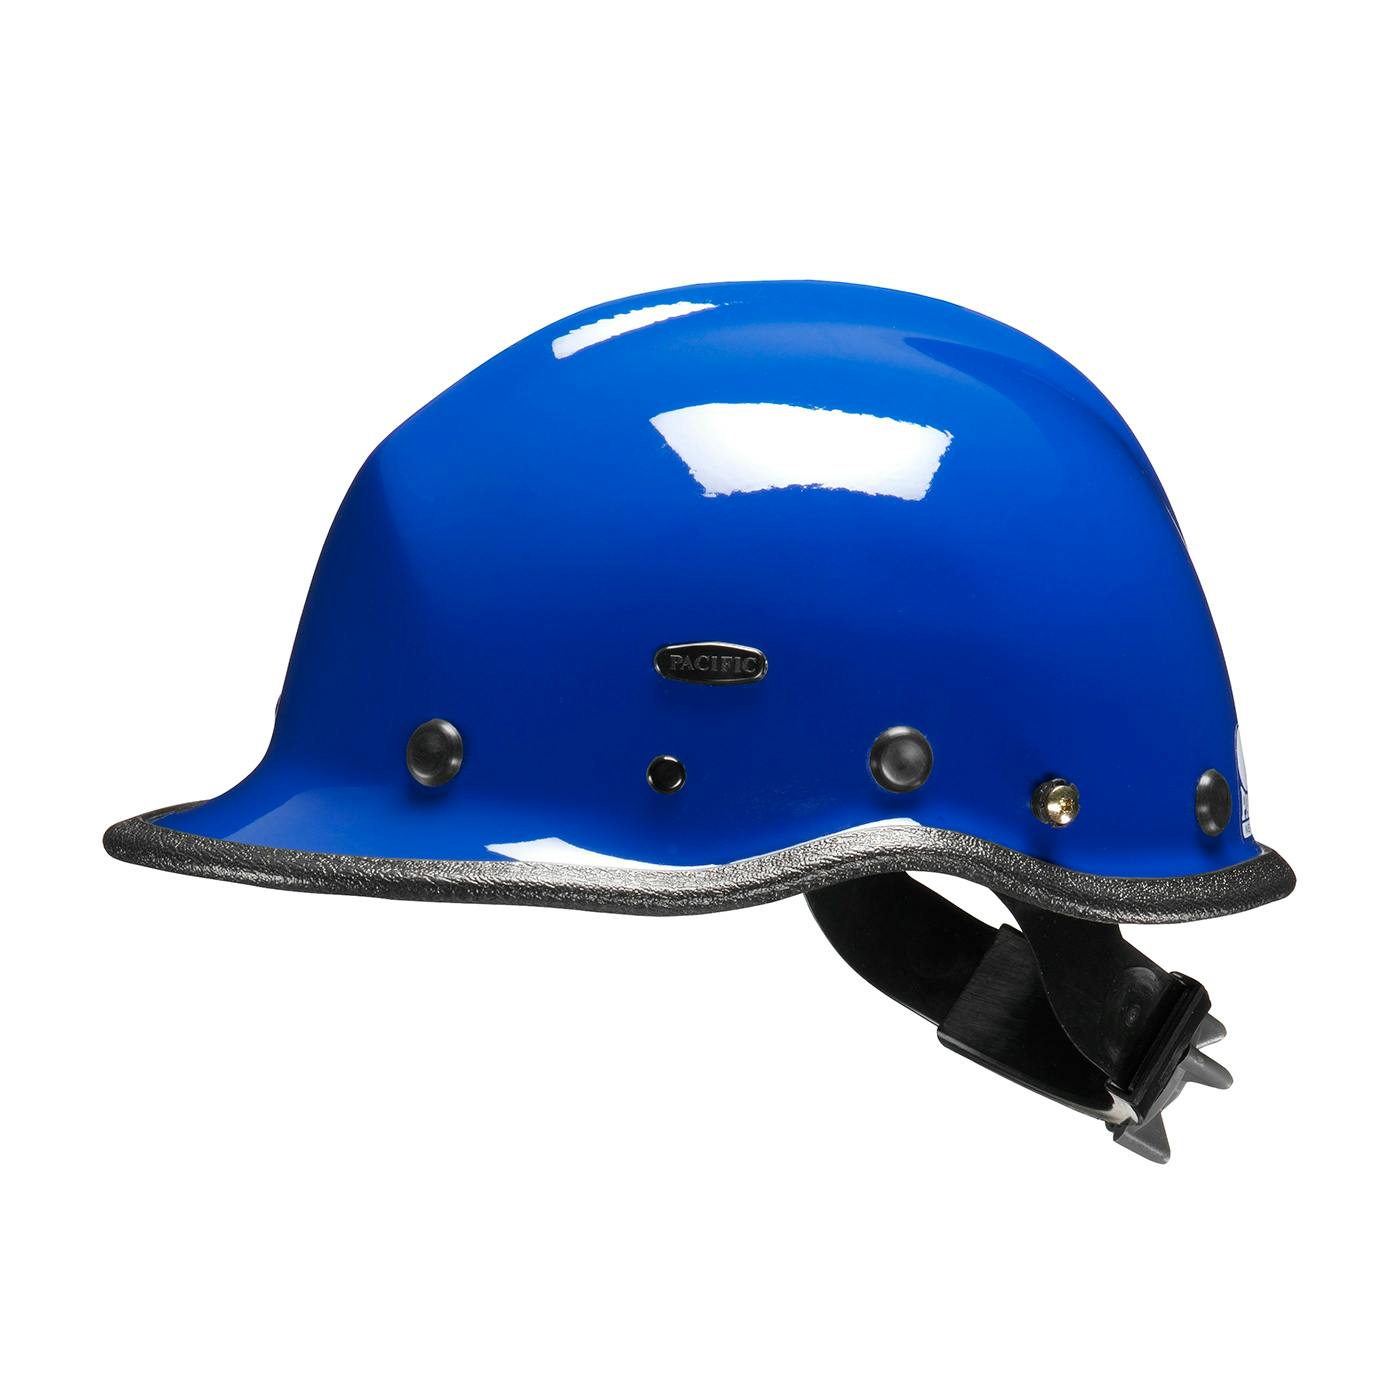 R5™ Rescue Helmet with ESS Goggle Mounts (854-60XX)